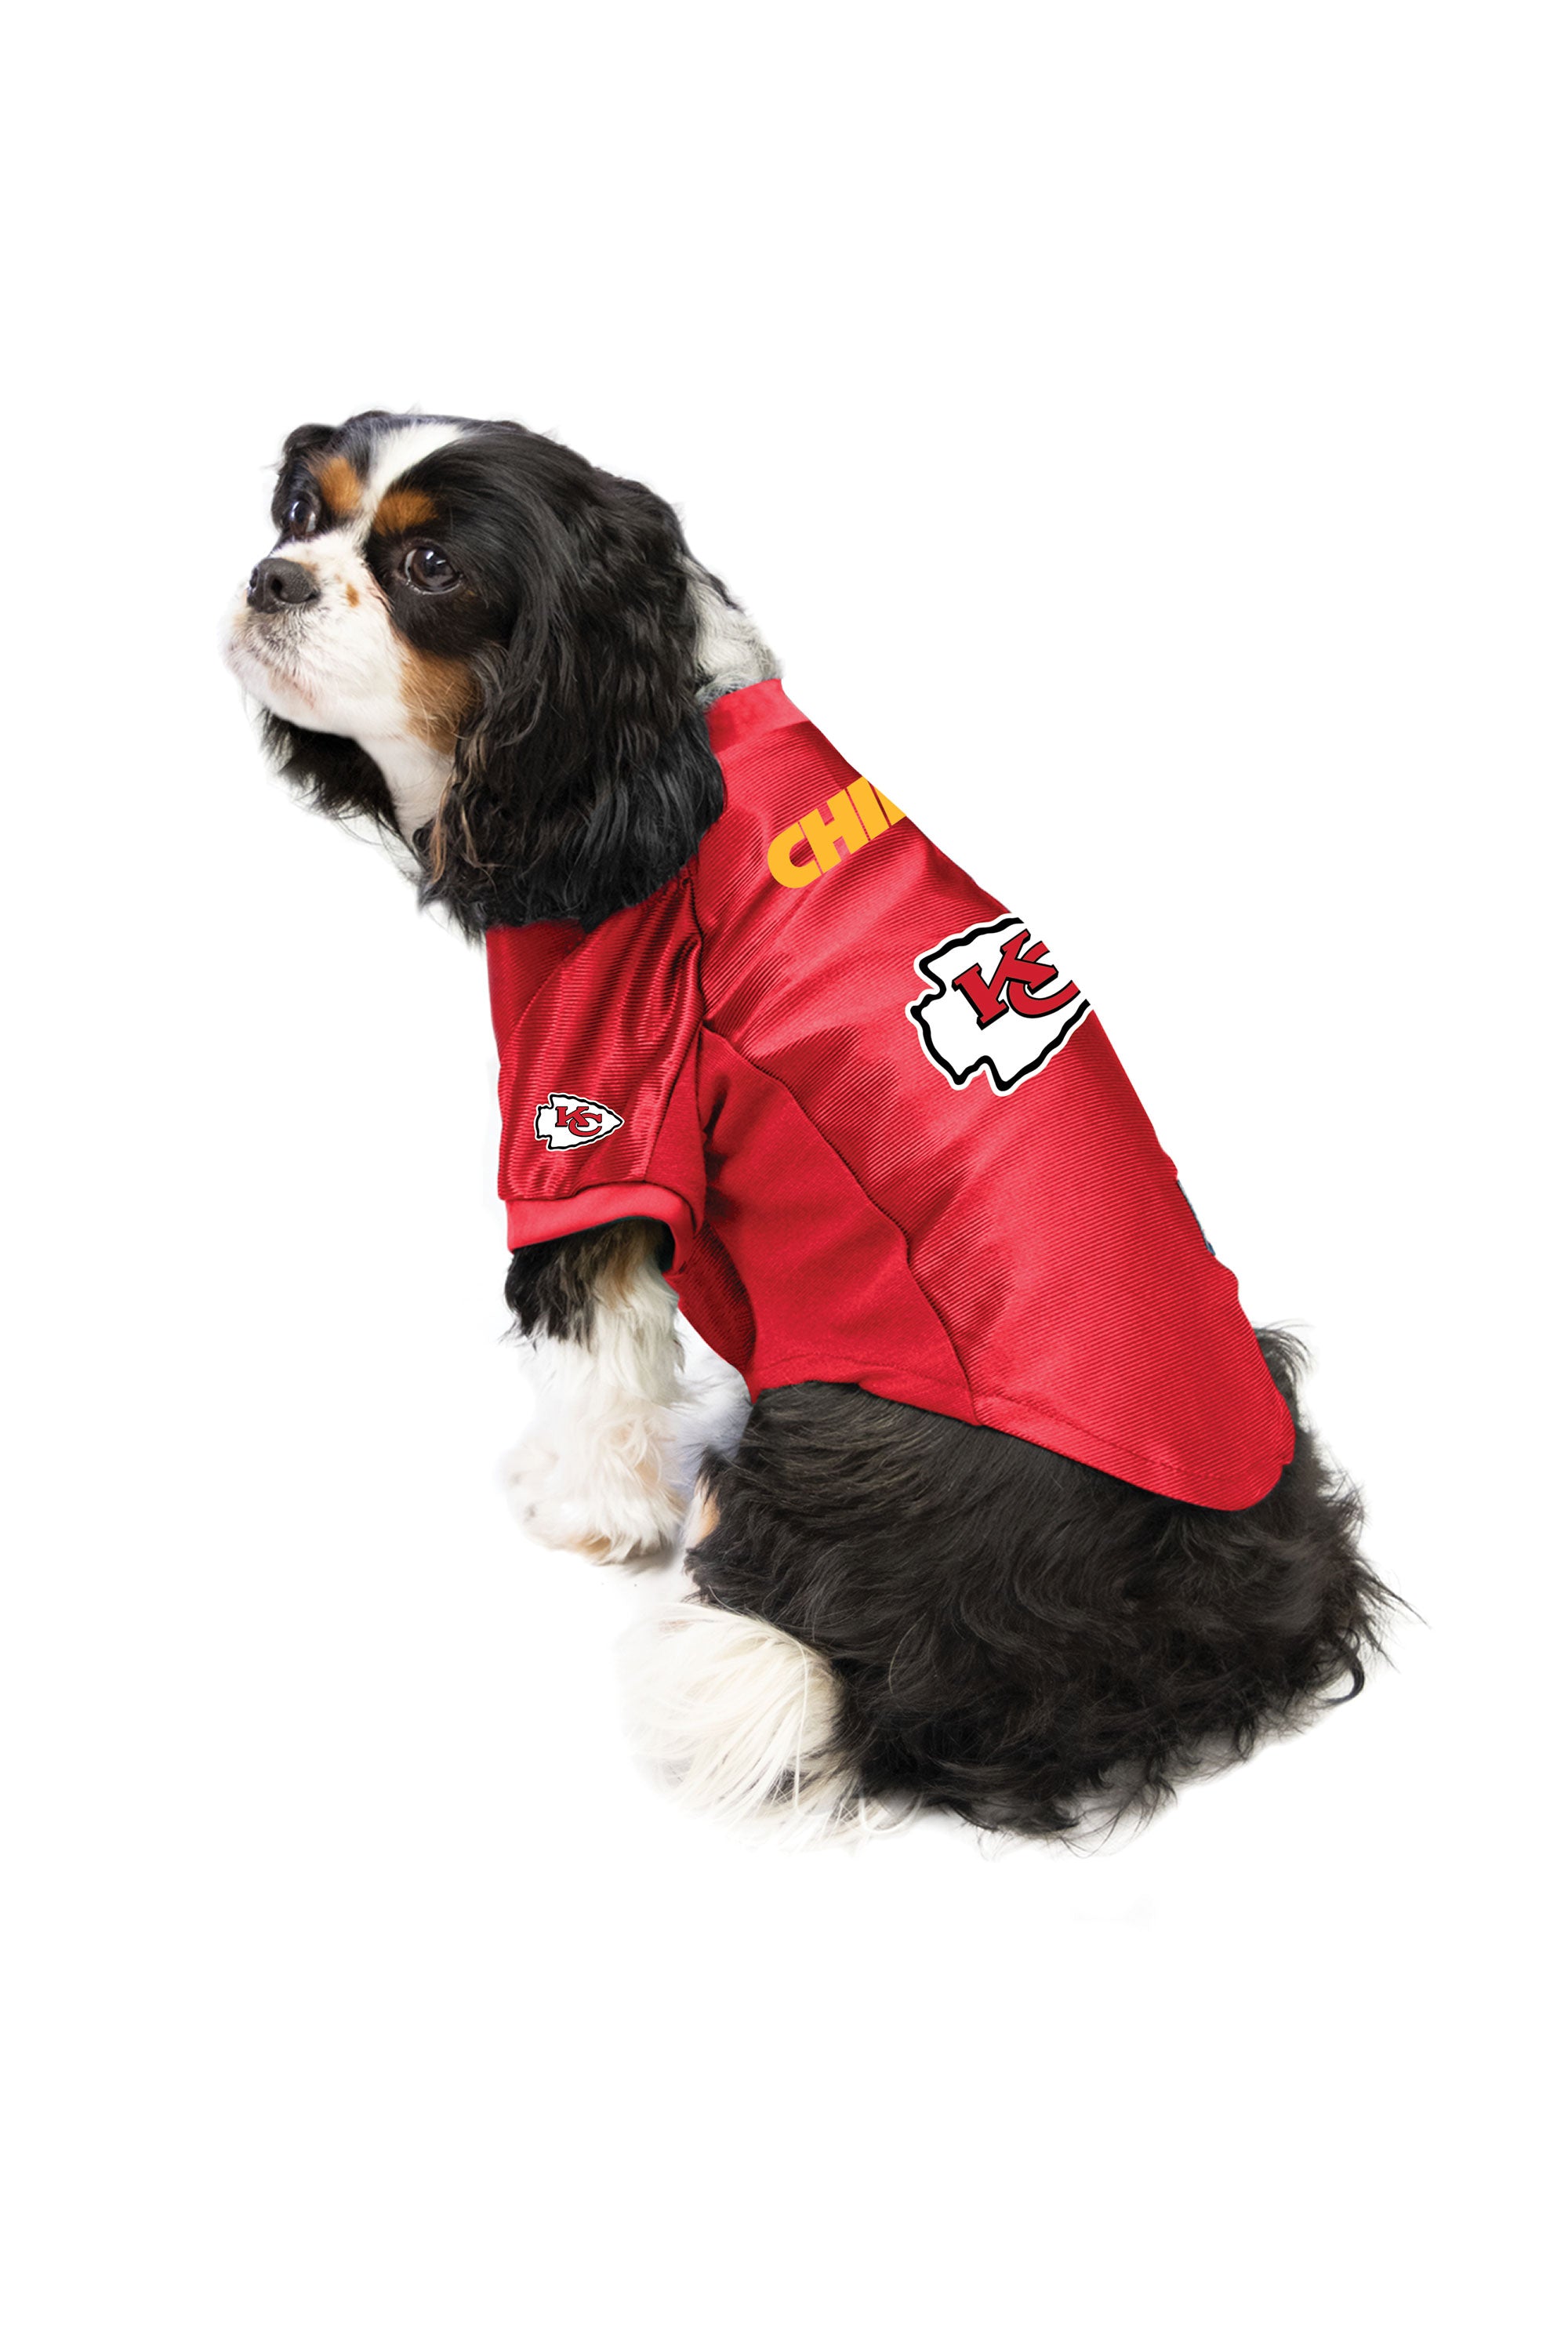 dog chiefs jersey